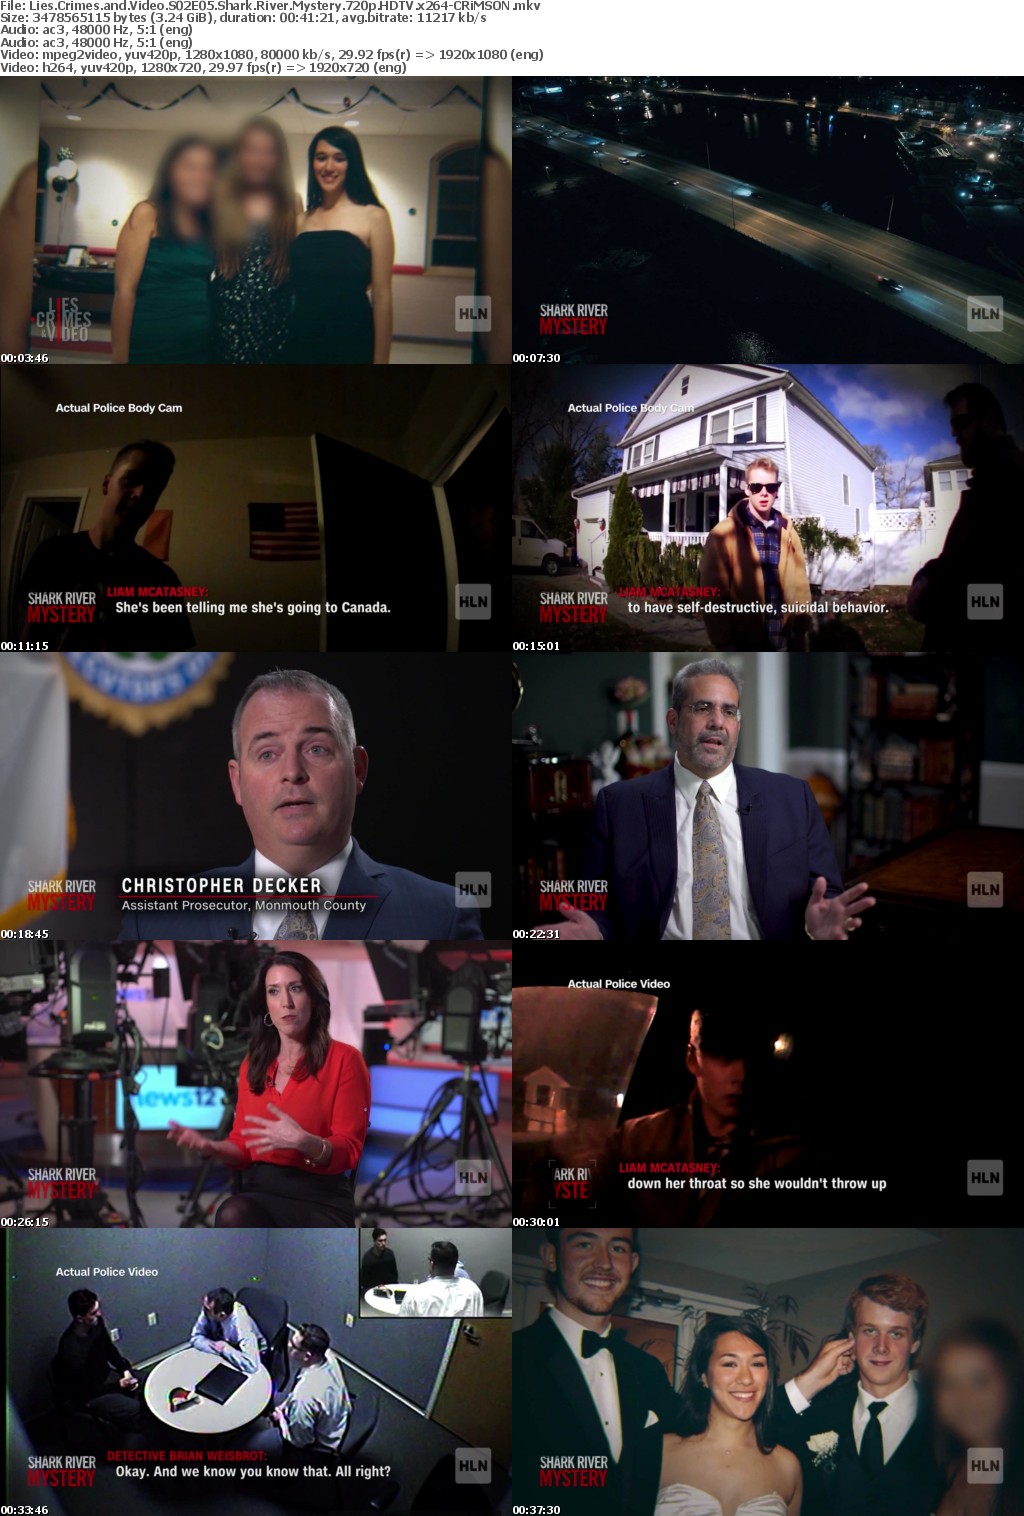 Lies Crimes and Video S02E05 Shark River Mystery 720p HDTV x264-CRiMSON